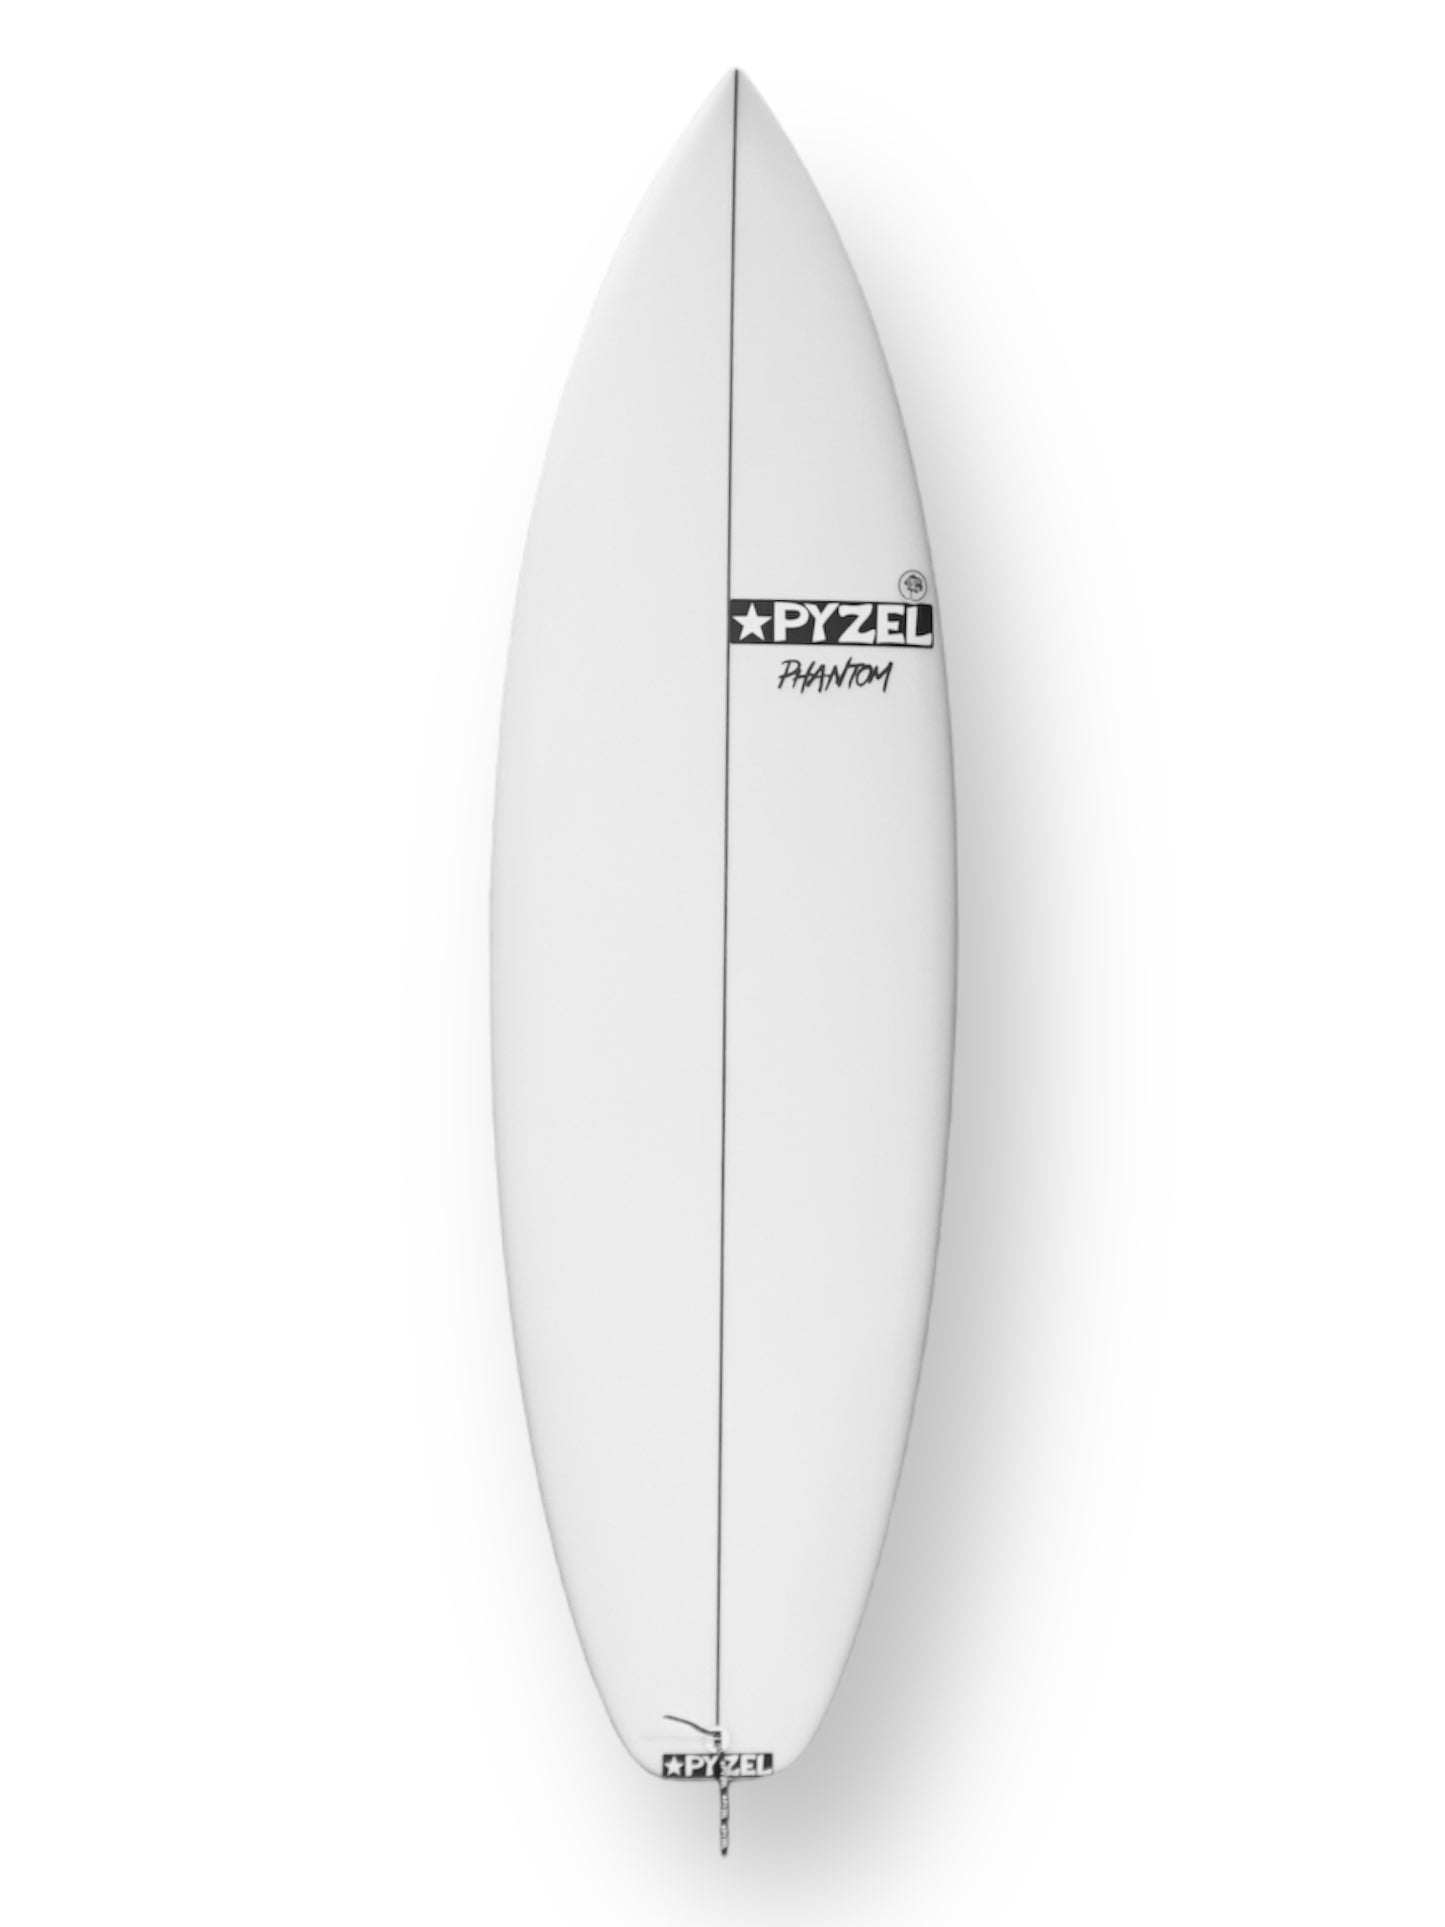 PYZEL PHANTOM 5'10" SURFBOARD